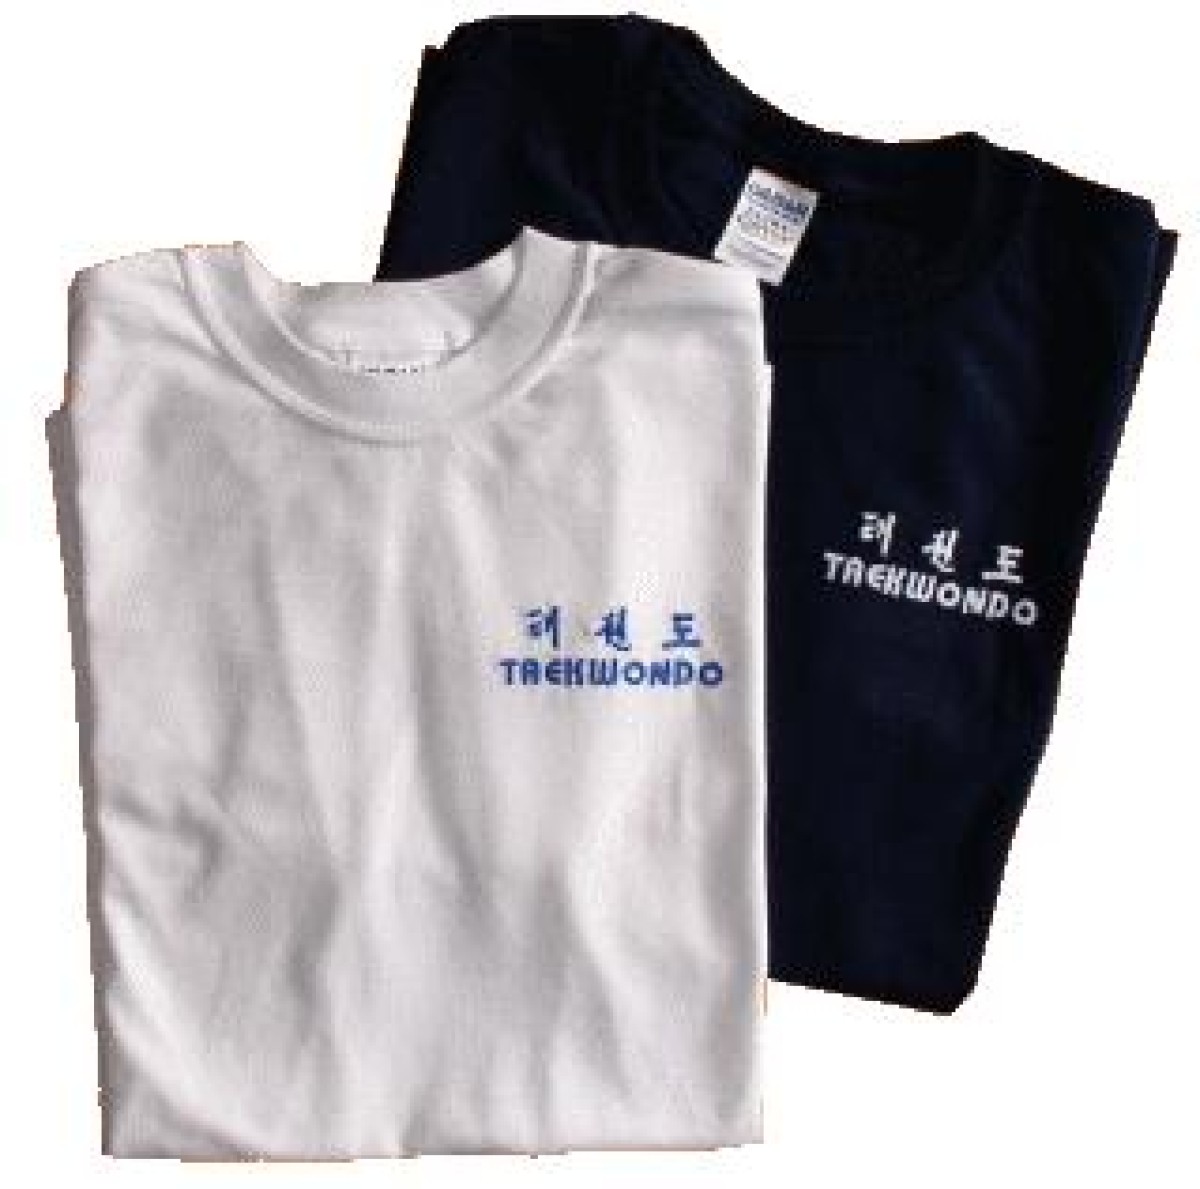 Sportland schweres Qualitäts Karate T-Shirt Herzschlag EKG Karate/Taekwondo/Kick S.B.J 